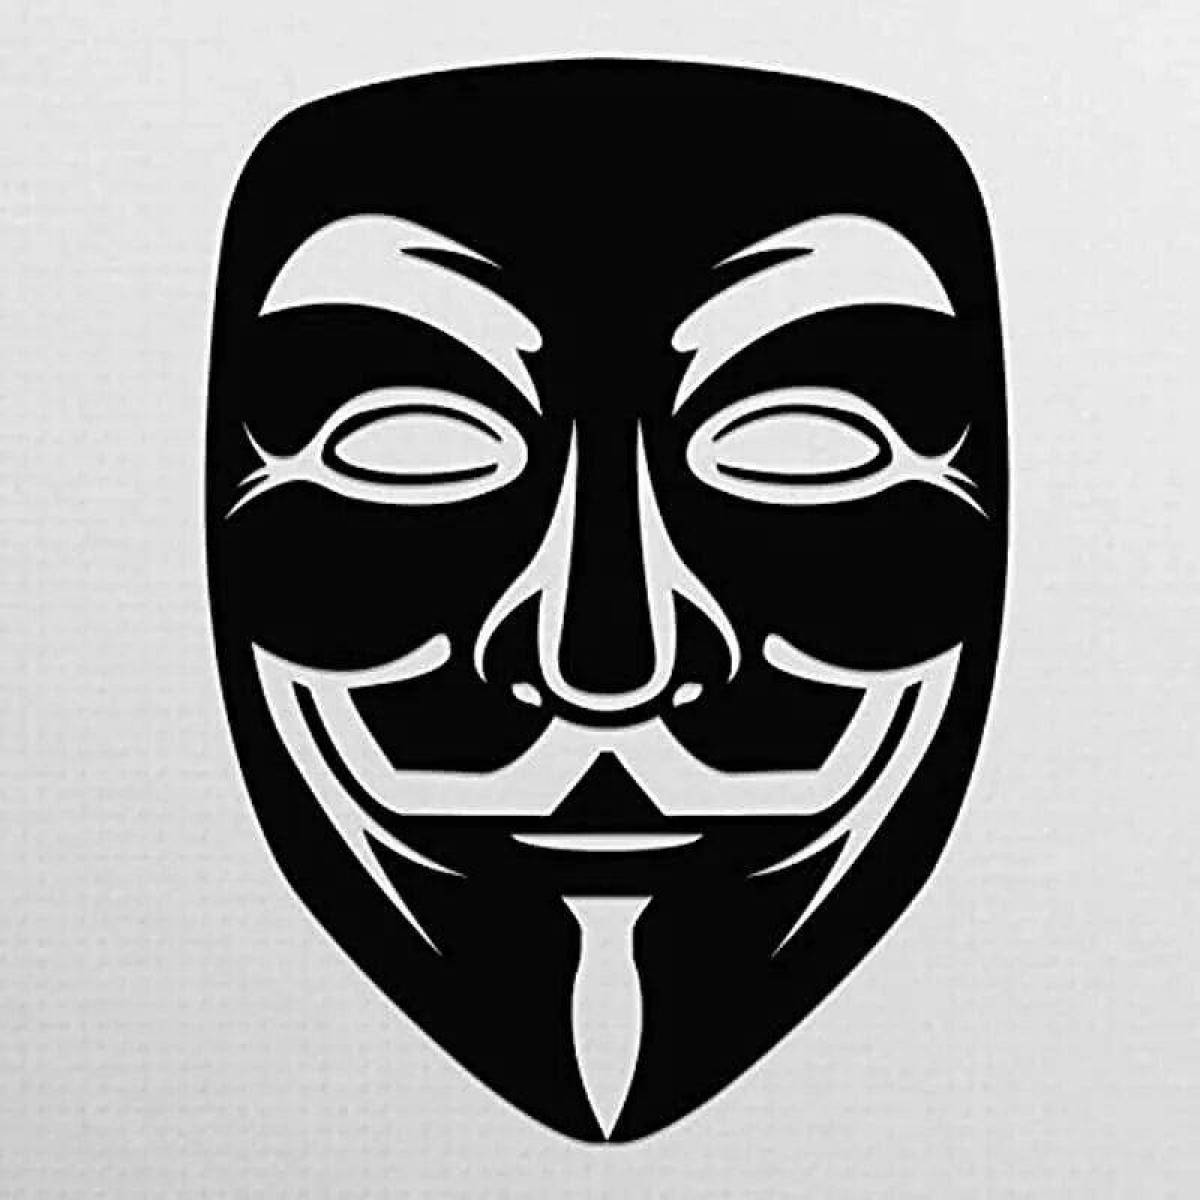 Маска изображения. Маска Пабло анонимус. Маска Анонимуса 2д. Черно-белая маска. Раскрашивание маски Анонимуса.